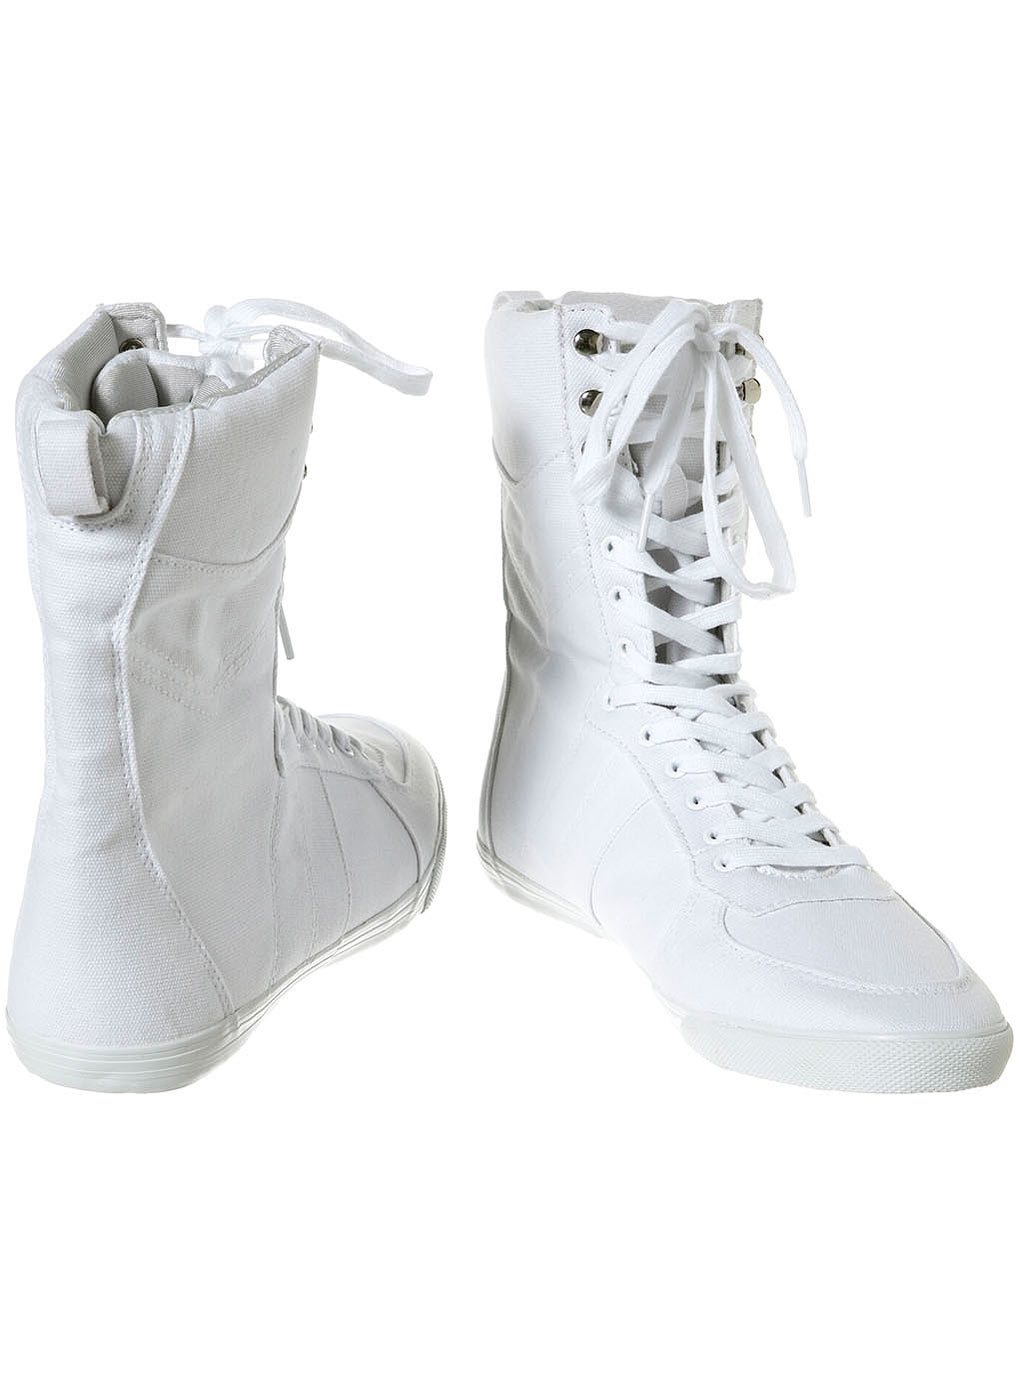 nike white boxing shoes